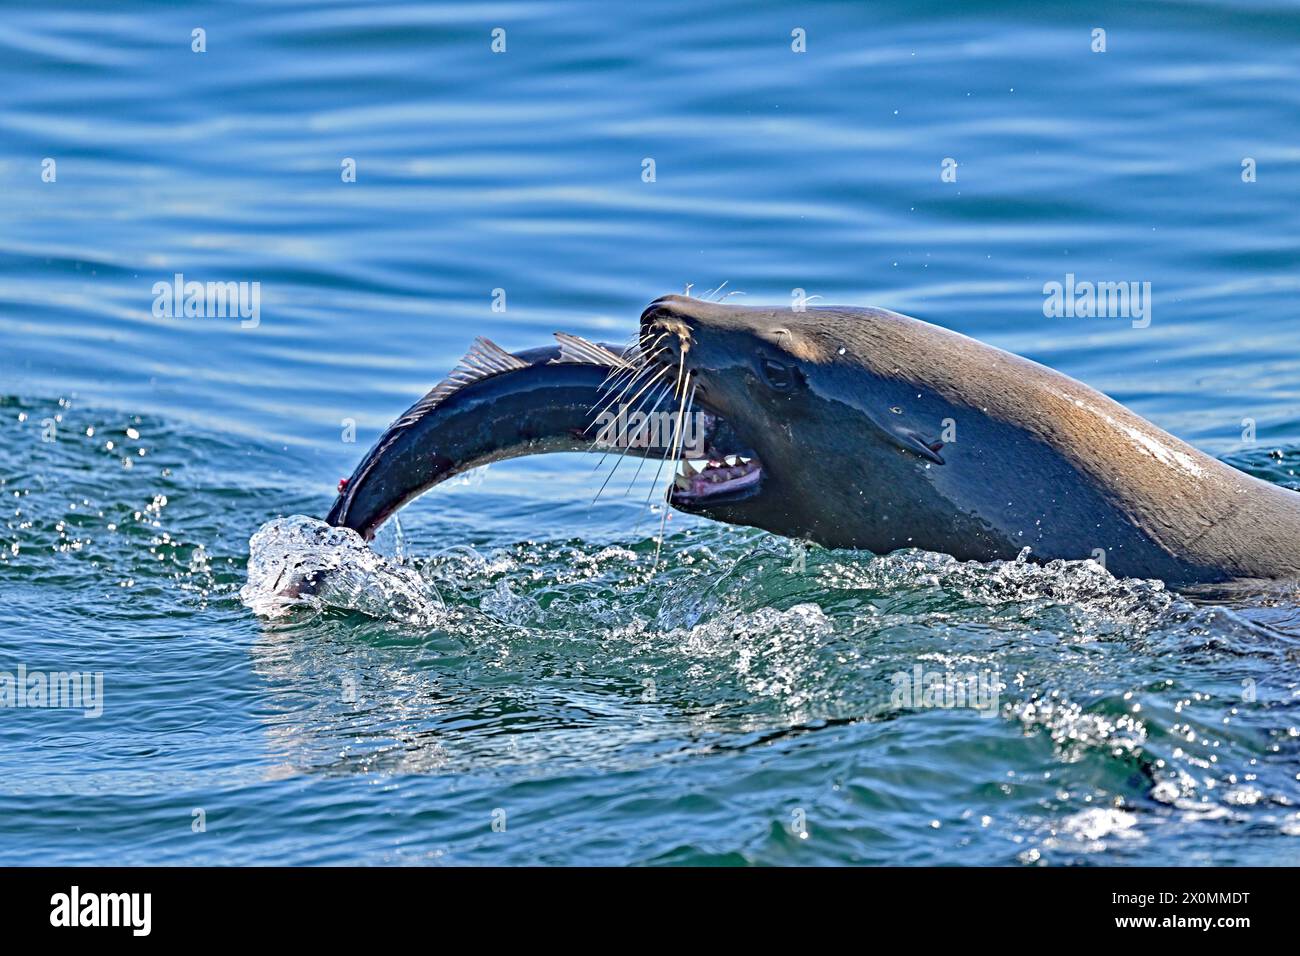 California Sea Lion chomping on a hug fish Stock Photo